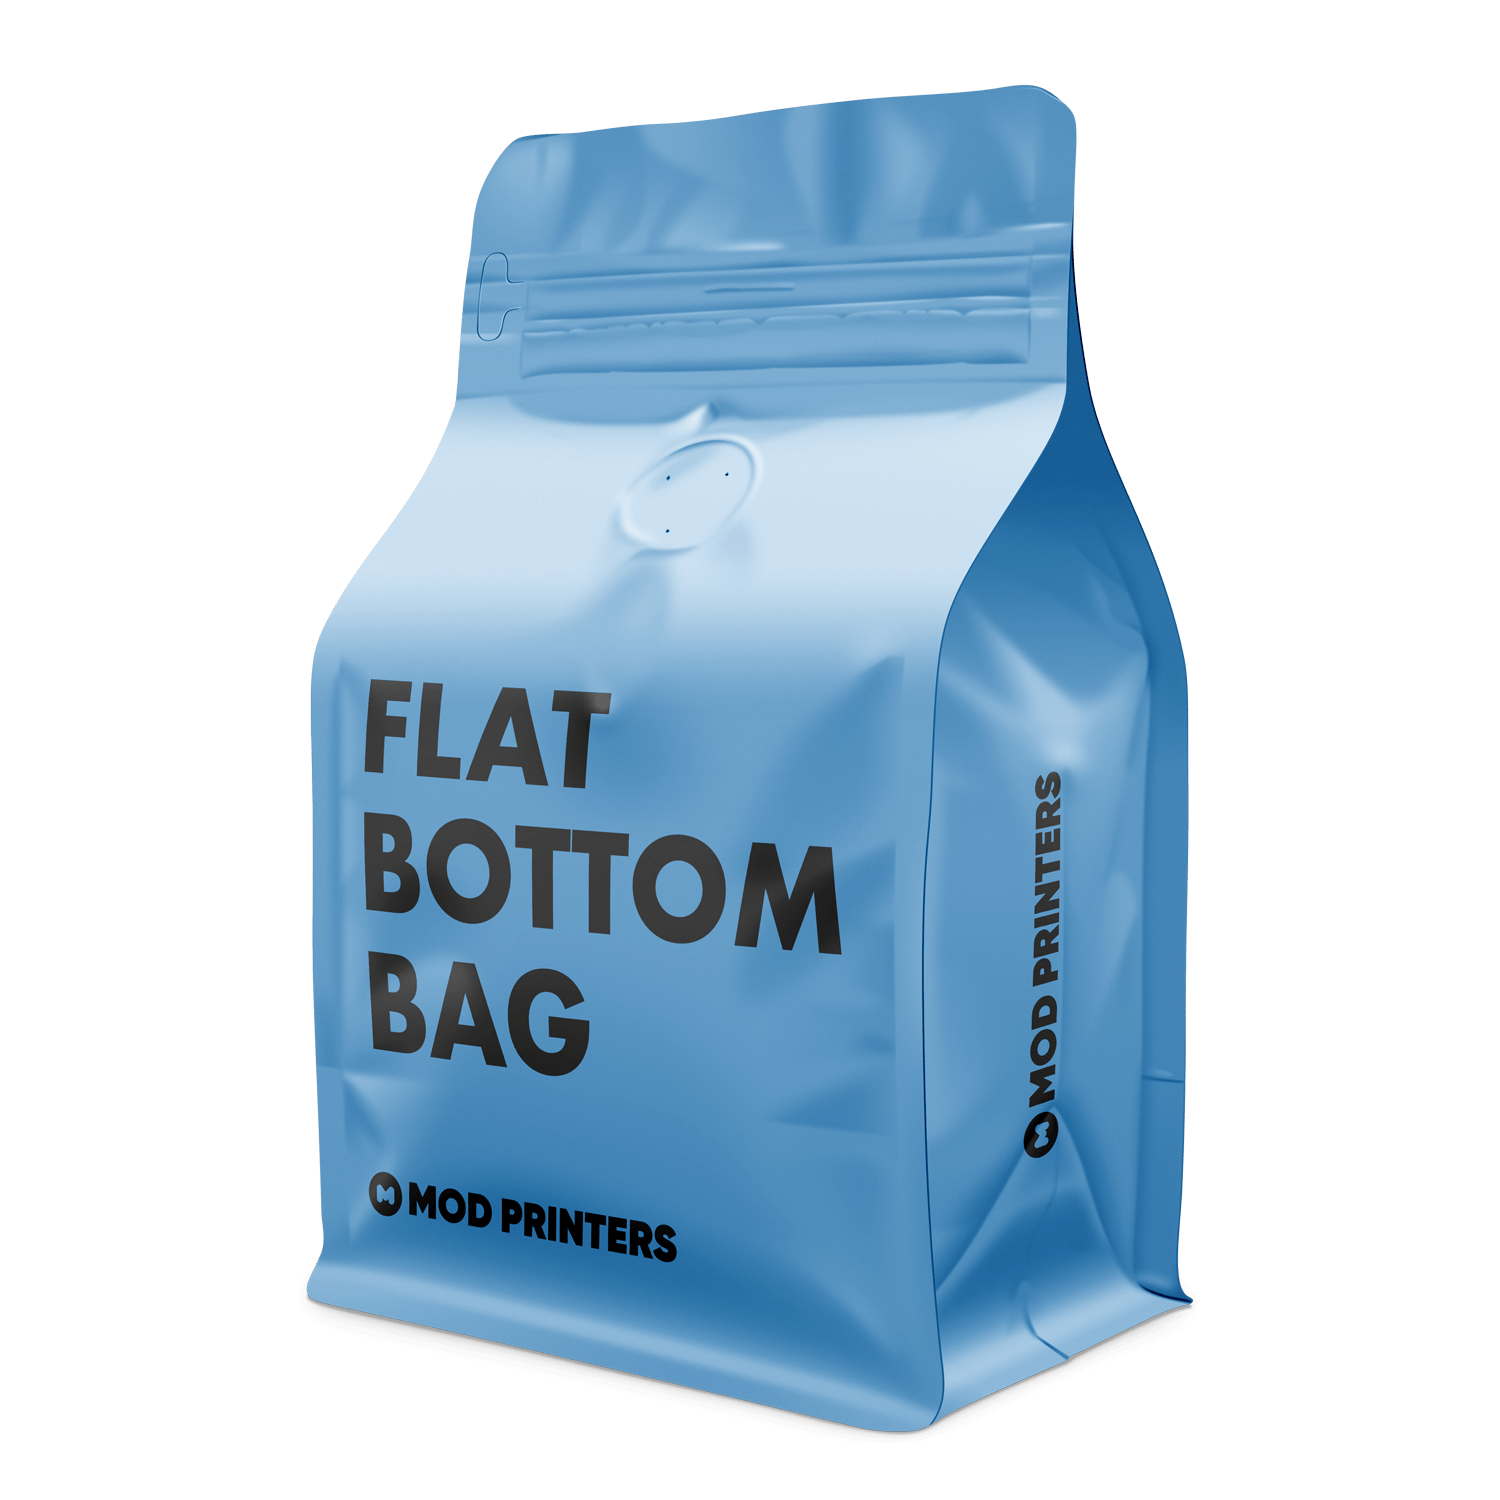 Flat Bottom Bag-Flat Bottom Bag-JBai Technology Co., LTD